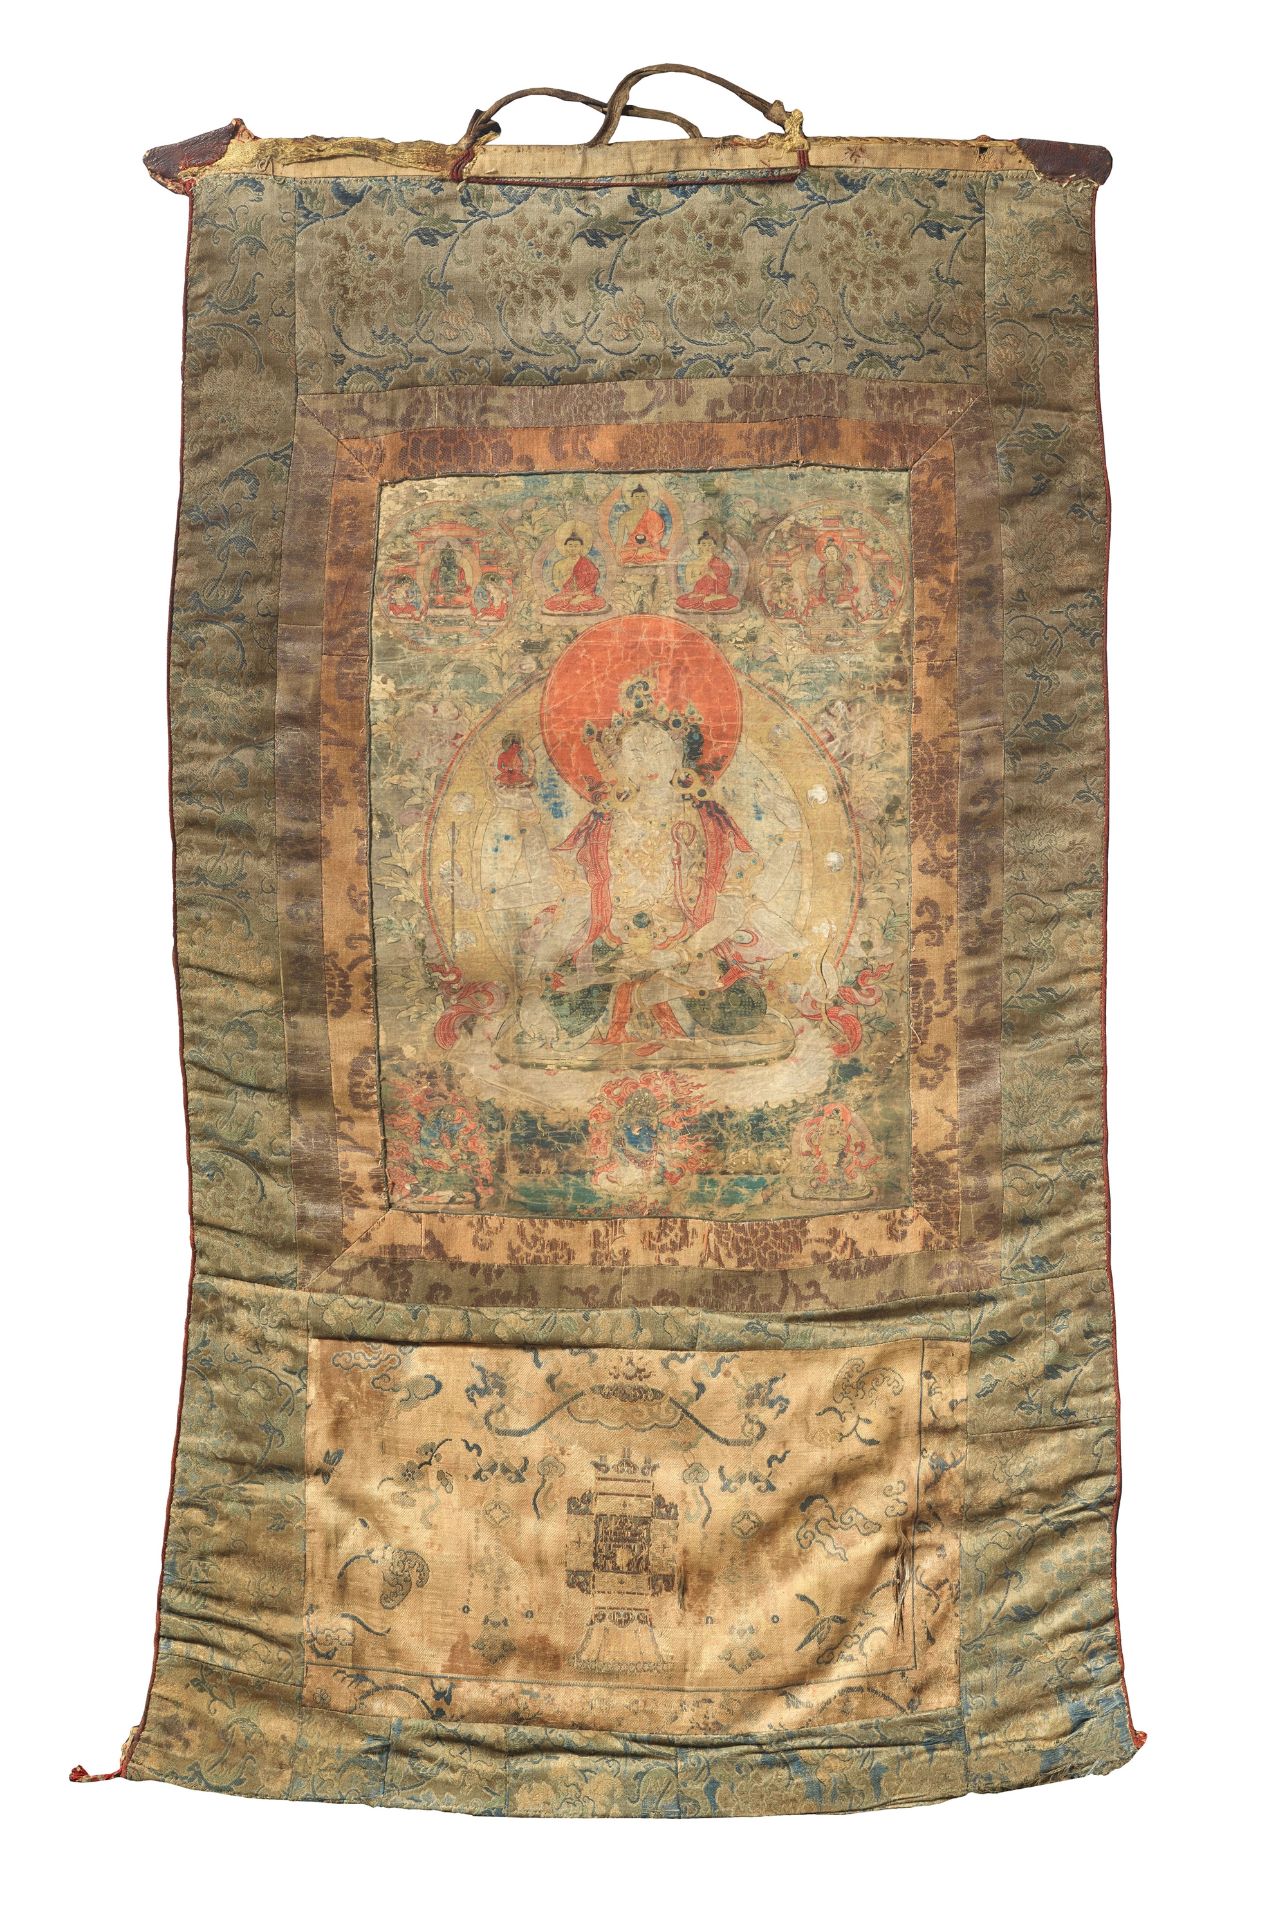 A thangka of Usnisavijaya. Tibet. 16th/17th century